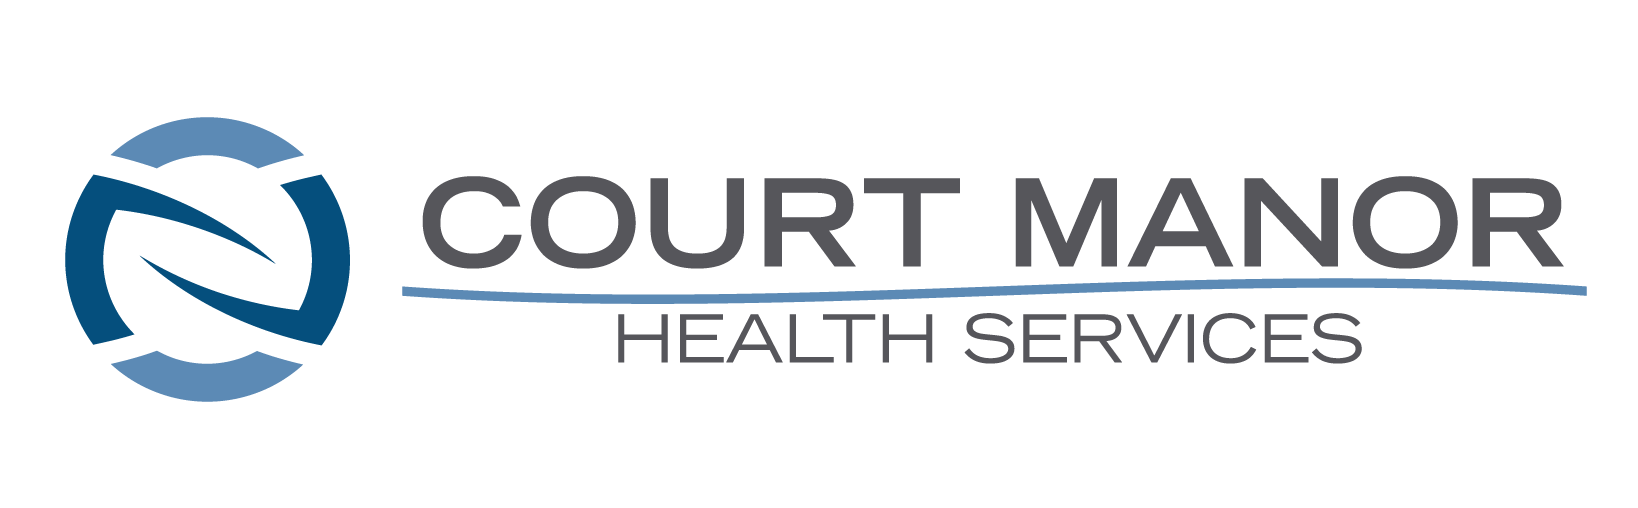 Court Manor Health Services North Shore Healthcare